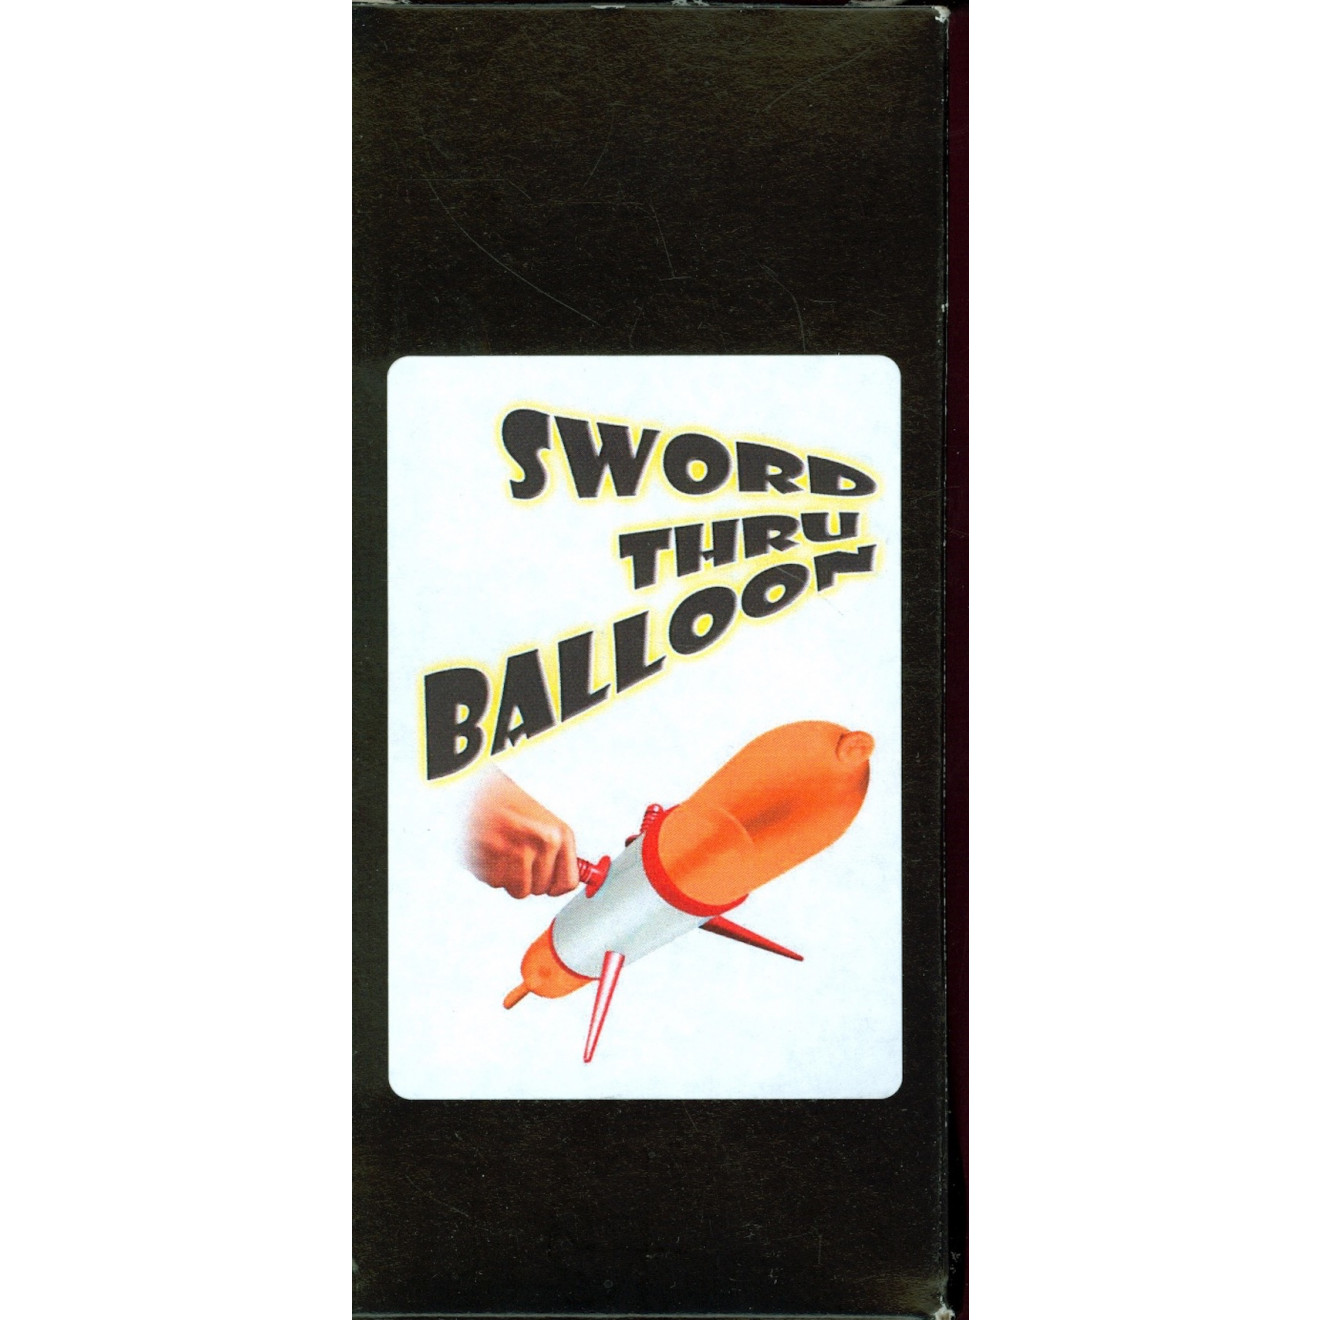 Sword thru Balloon